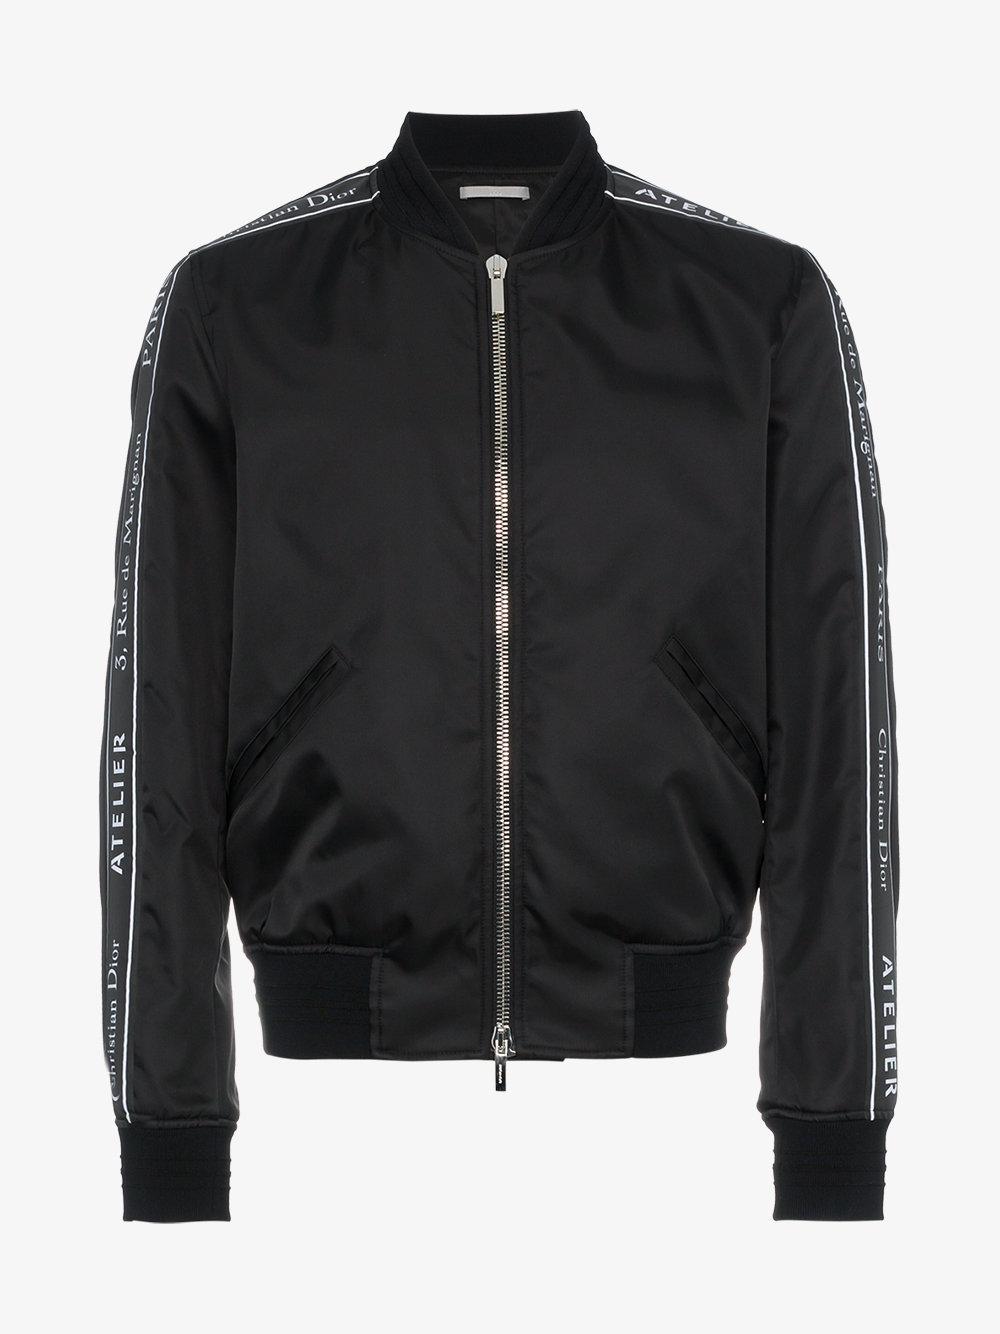 Dior Synthetic Logo Ribbon Bomber Jacket in Black for Men - Lyst